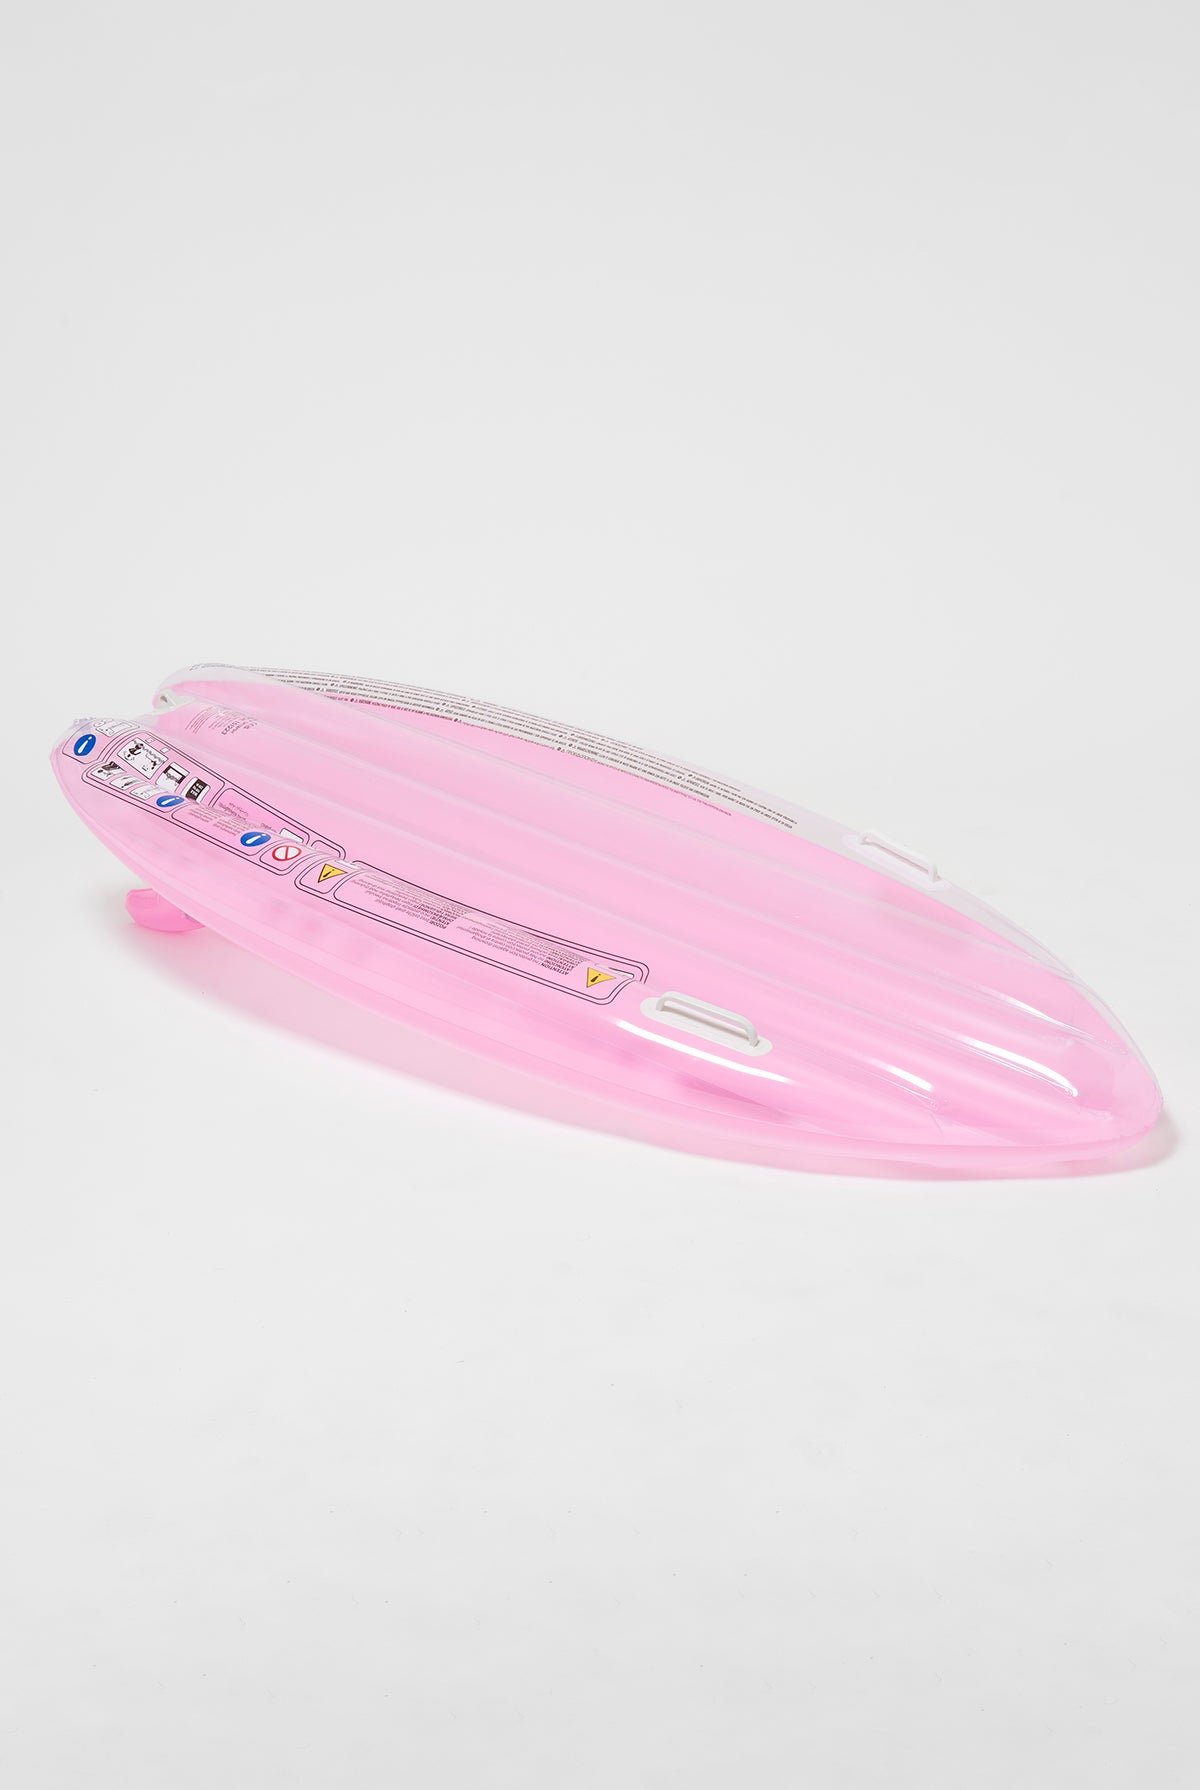 Sunnylife Kids Surfboard Float Summer Sherbet Bubblegum Pink